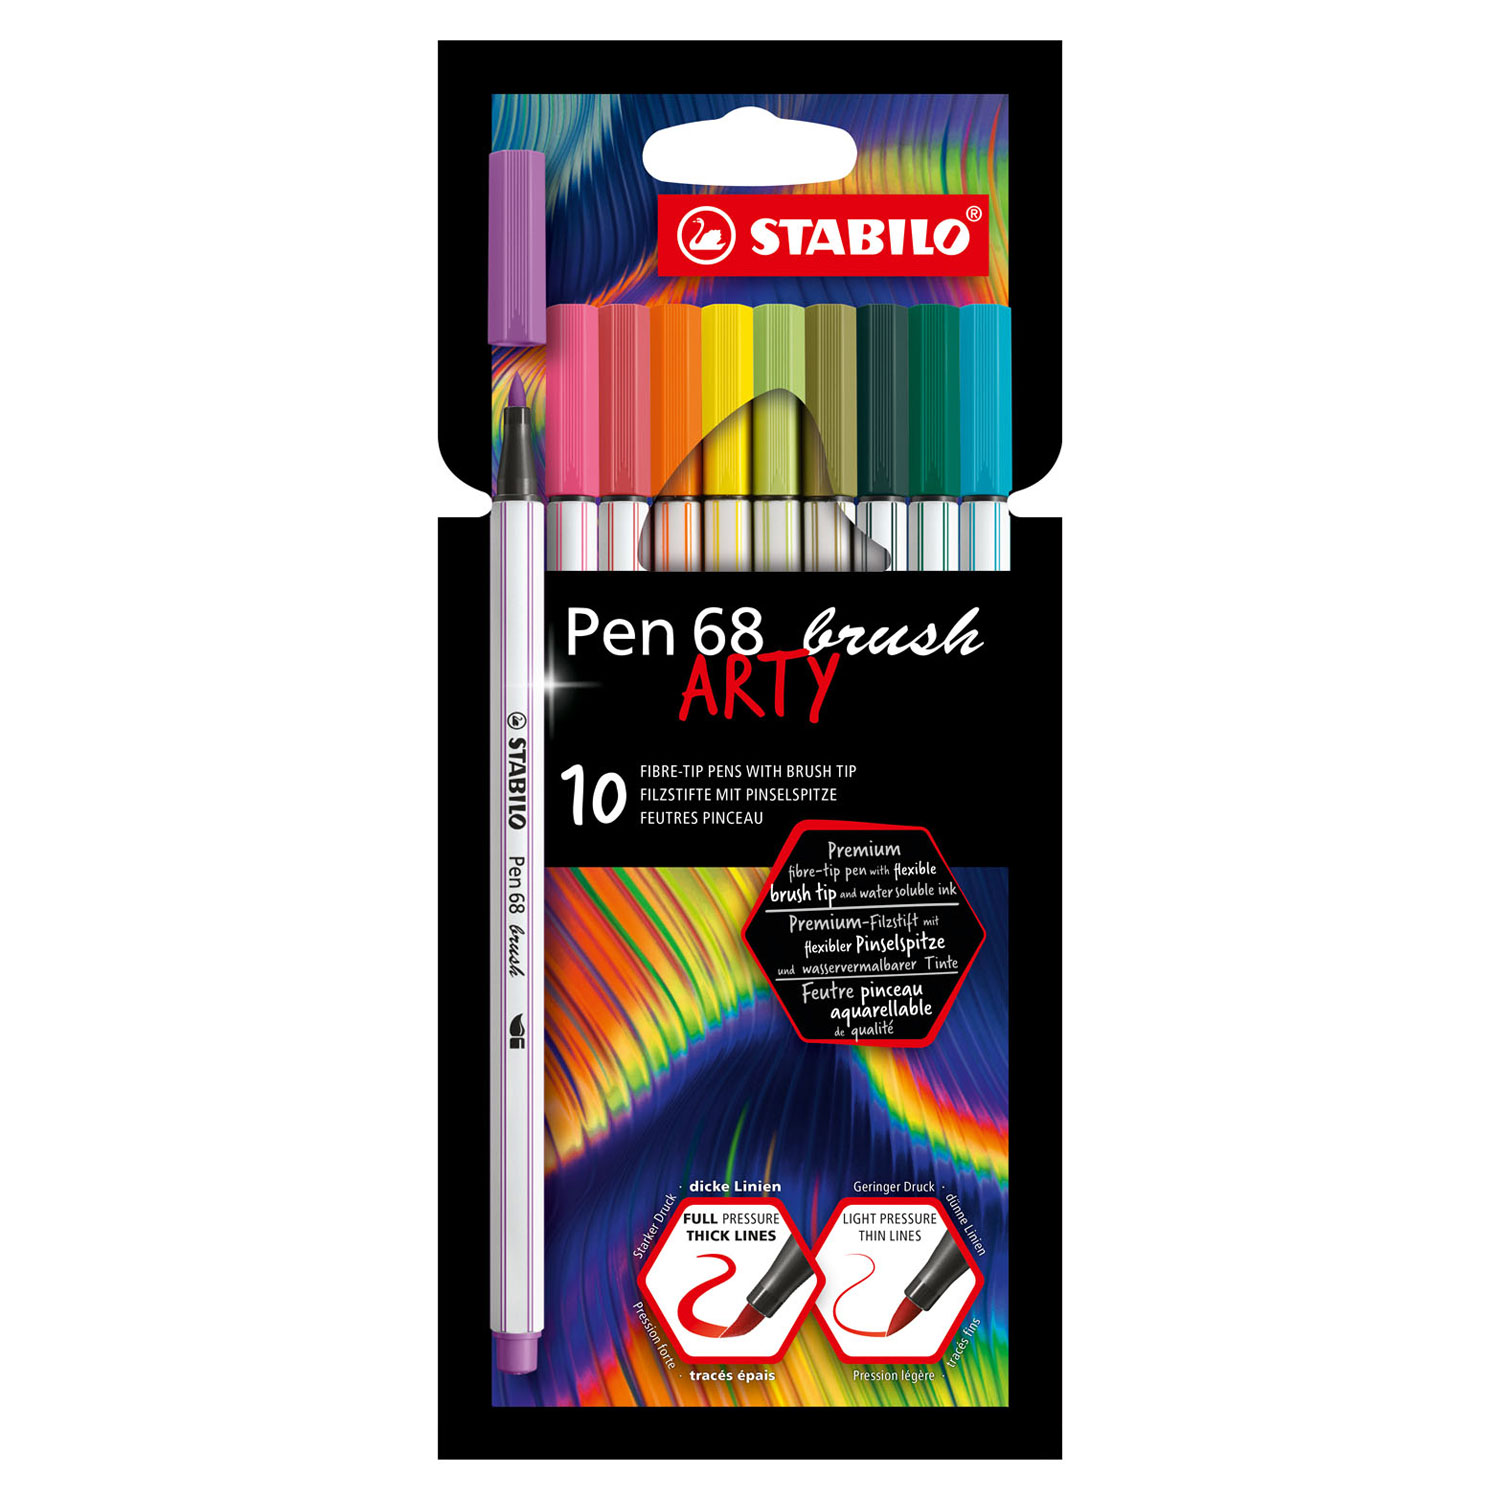 Stabilo Pen 68 Fiber-tip Pen